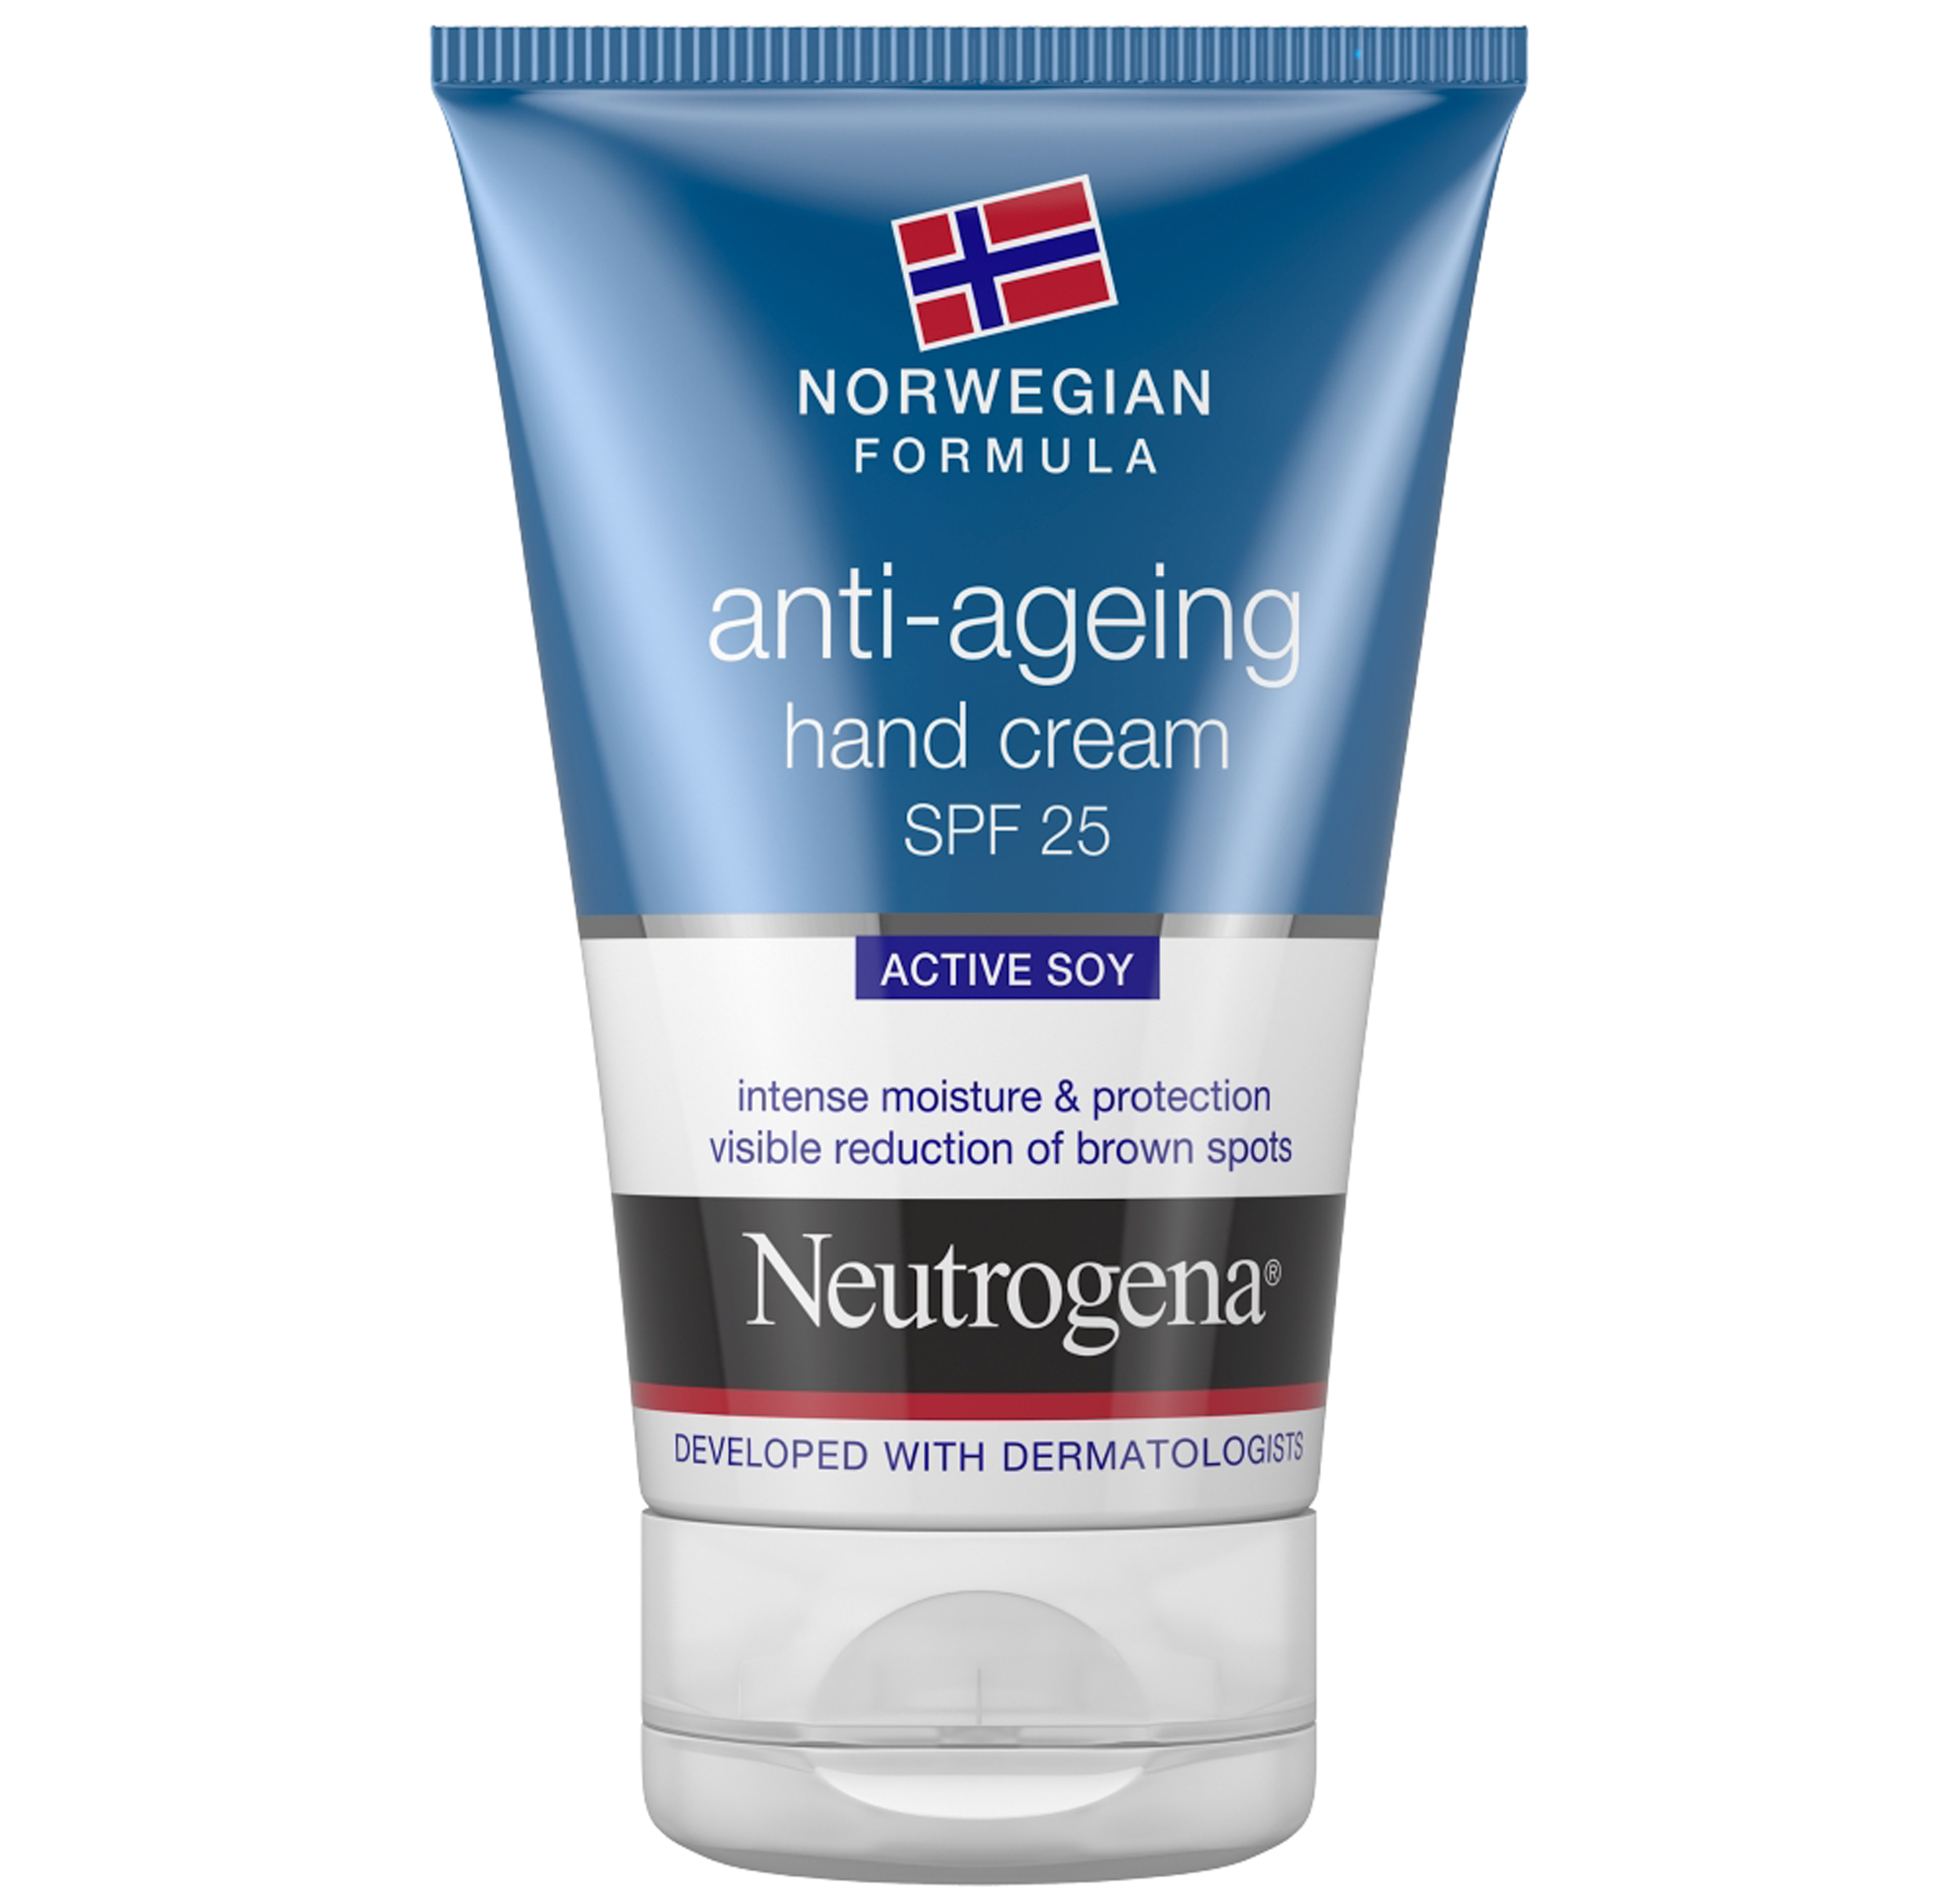 Neutrogena Norwegian Formula Anti-Ageing Hand Cream SPF25